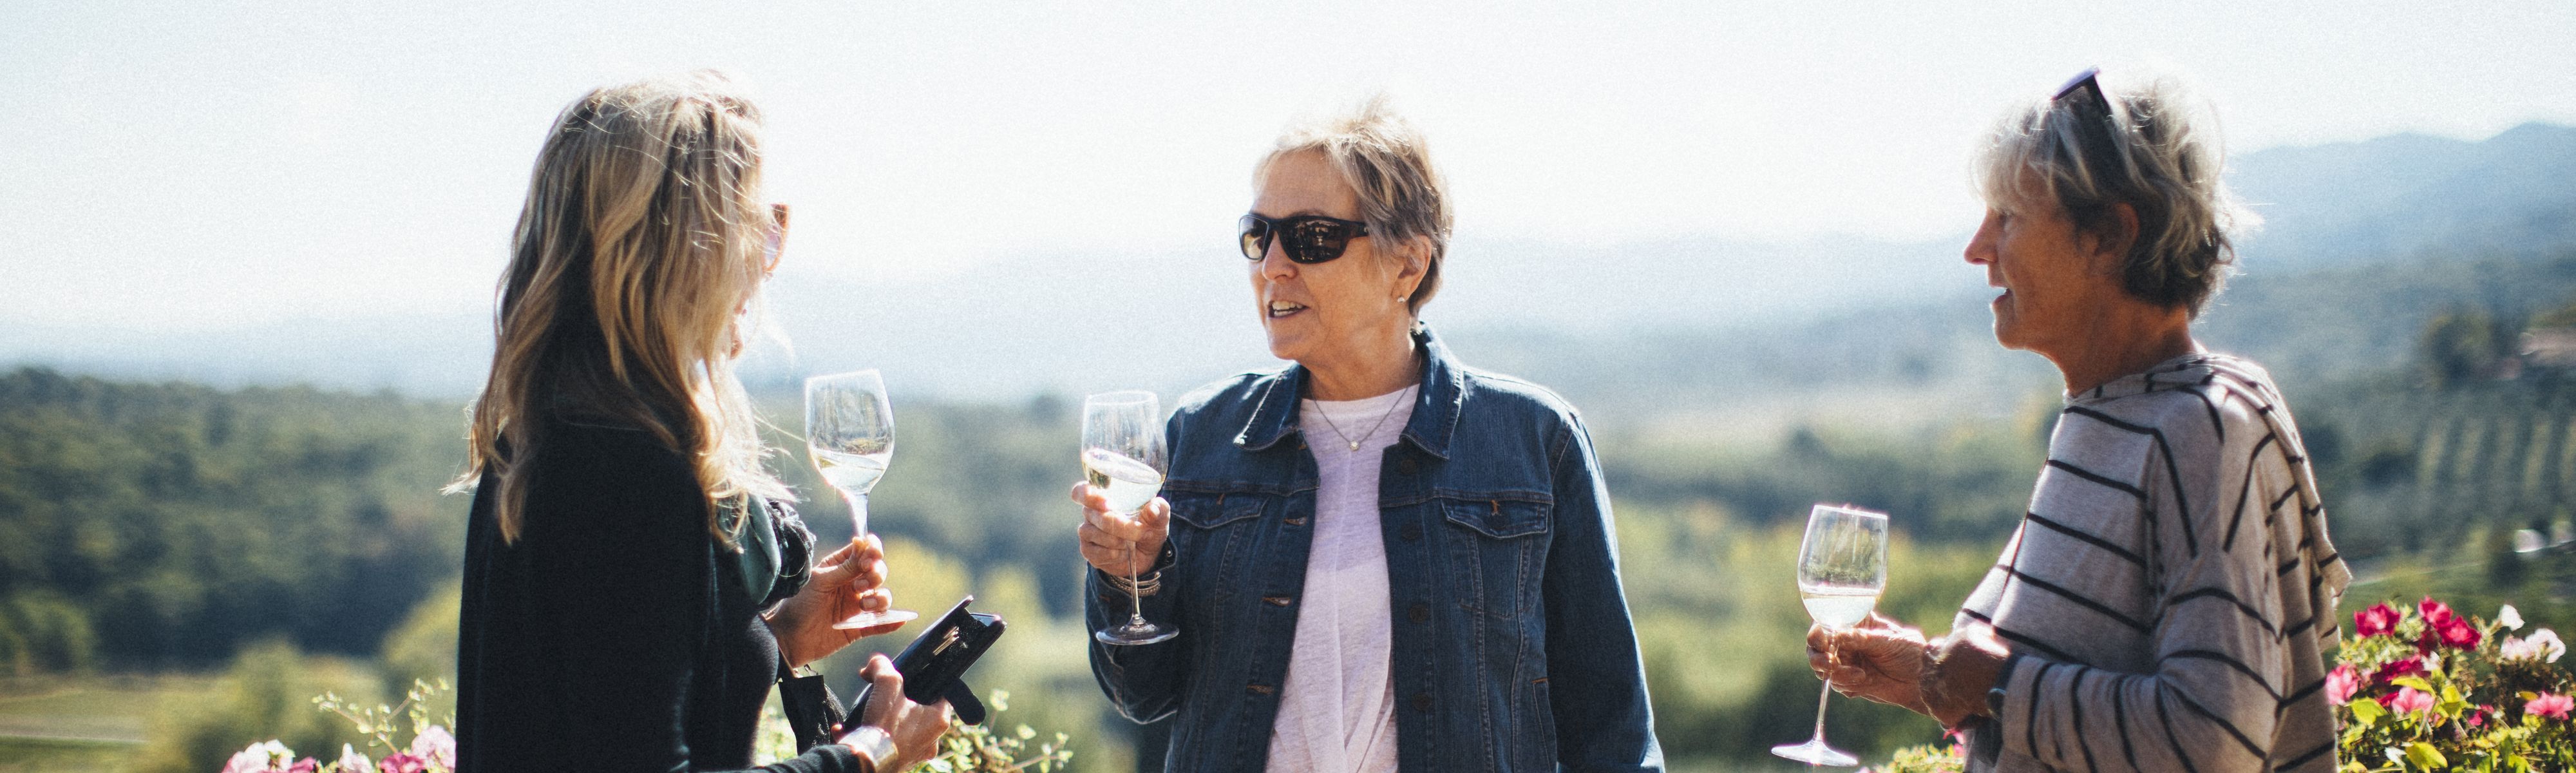 three women holding wine glasses in tuscany italy